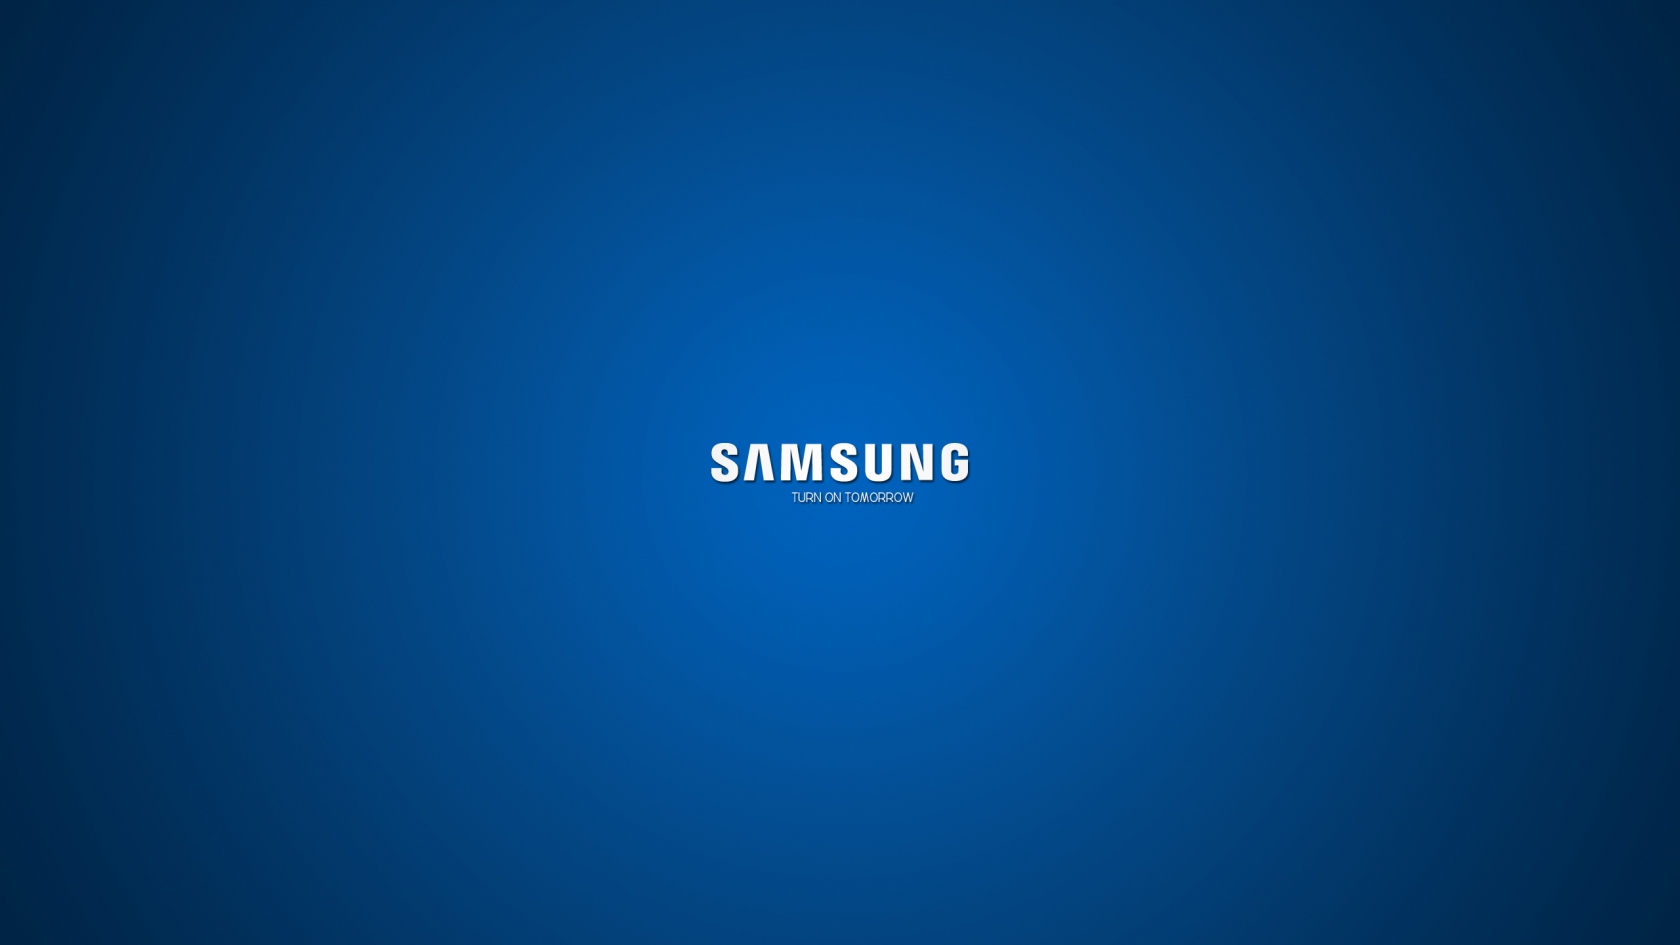 Samsung for 1680 x 945 HDTV resolution